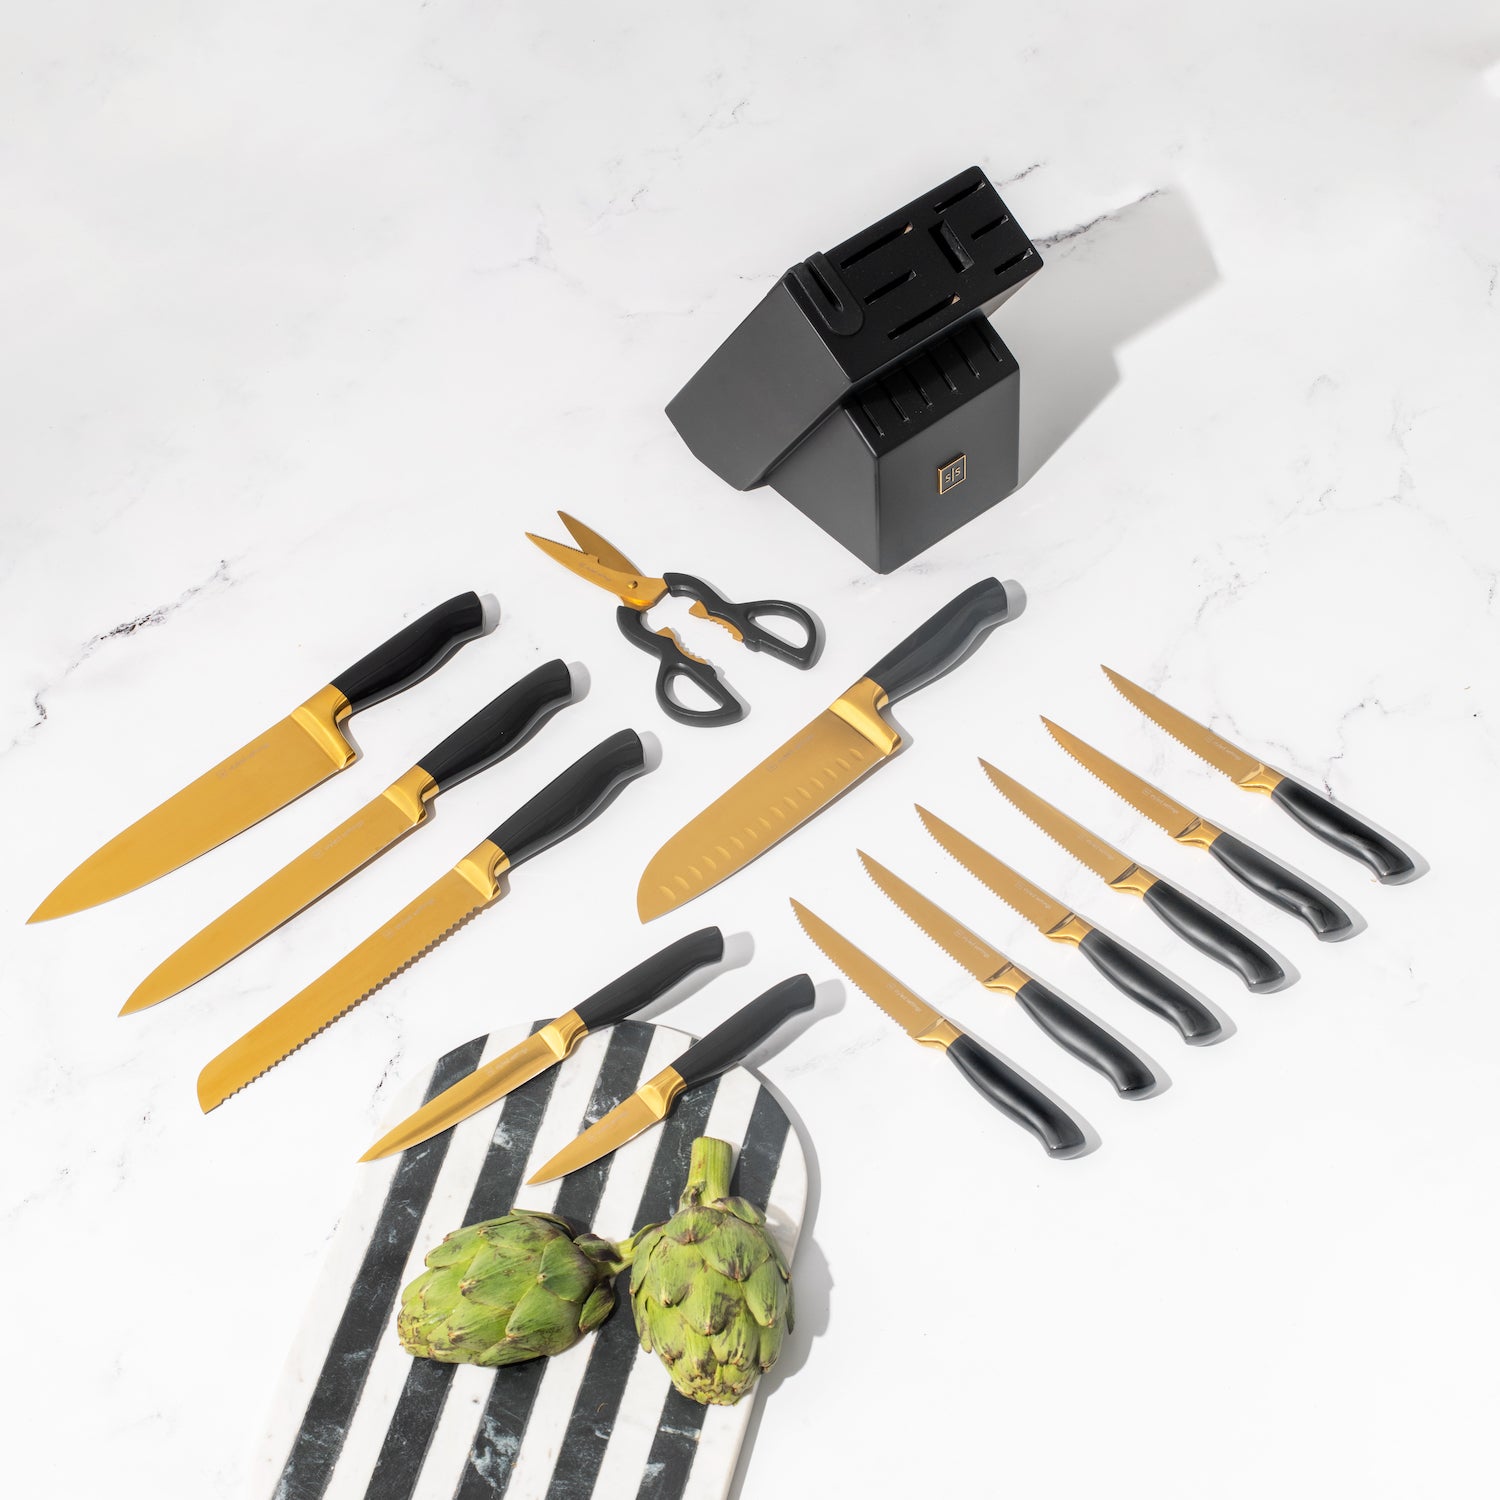 Gold Knife Set with Black Self-Sharpening Block